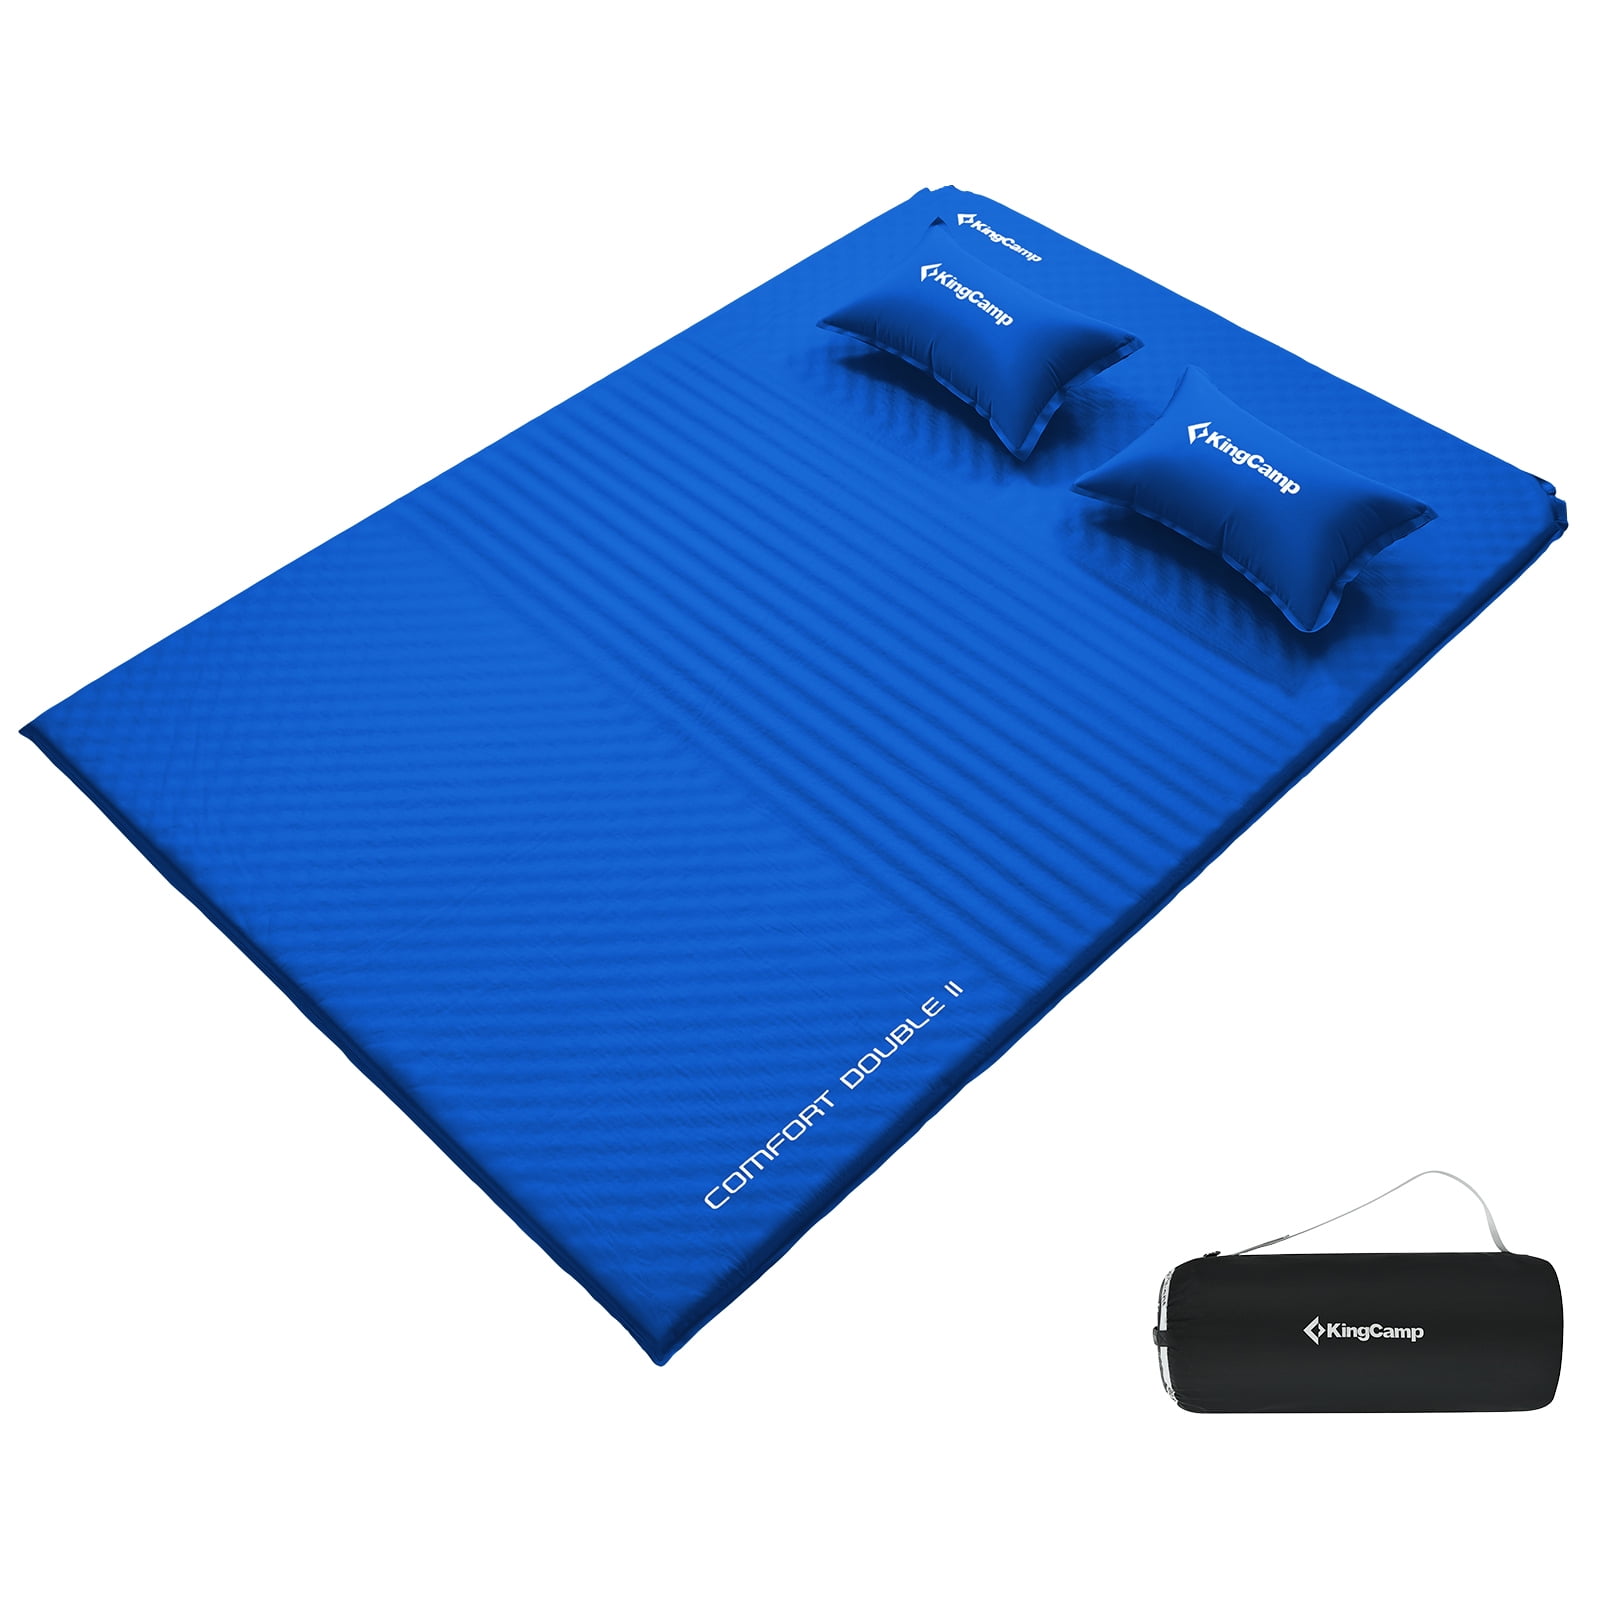 KingCamp Double Self Inflating Camping Sleeping Pad Mat w/ 2 Pillows, Blue